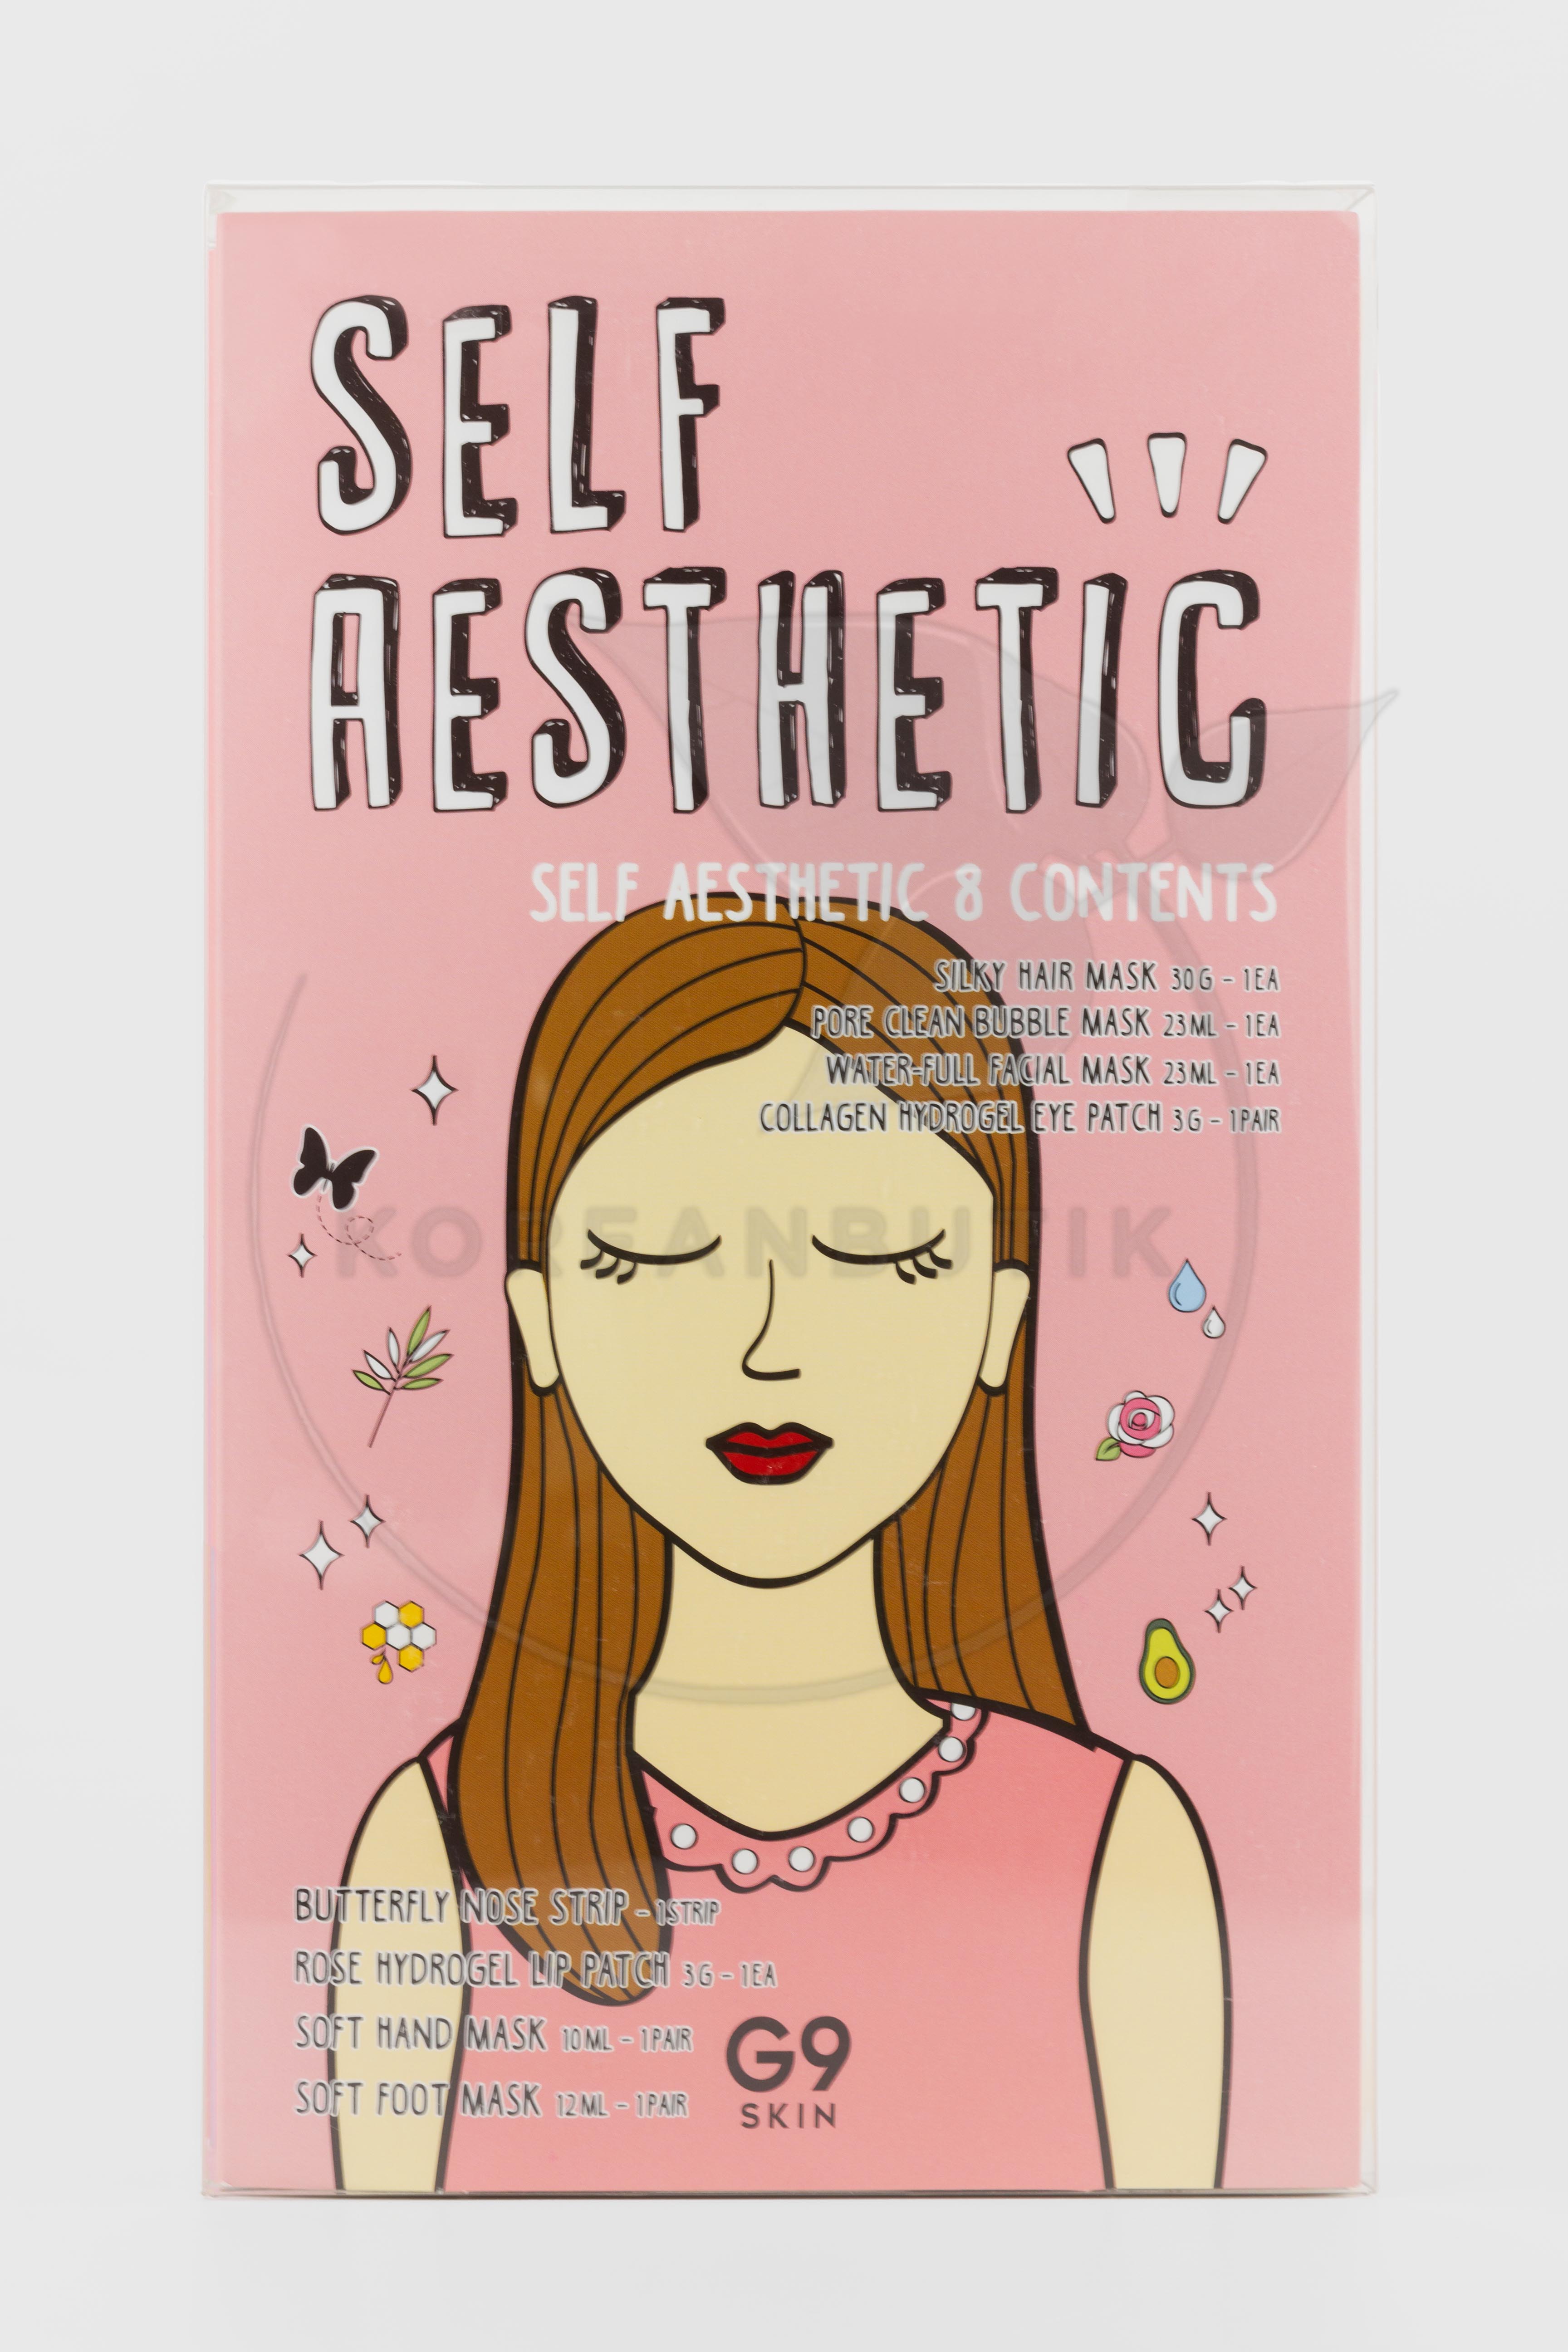  G9 Skin Self Aesthetic Magazine ..